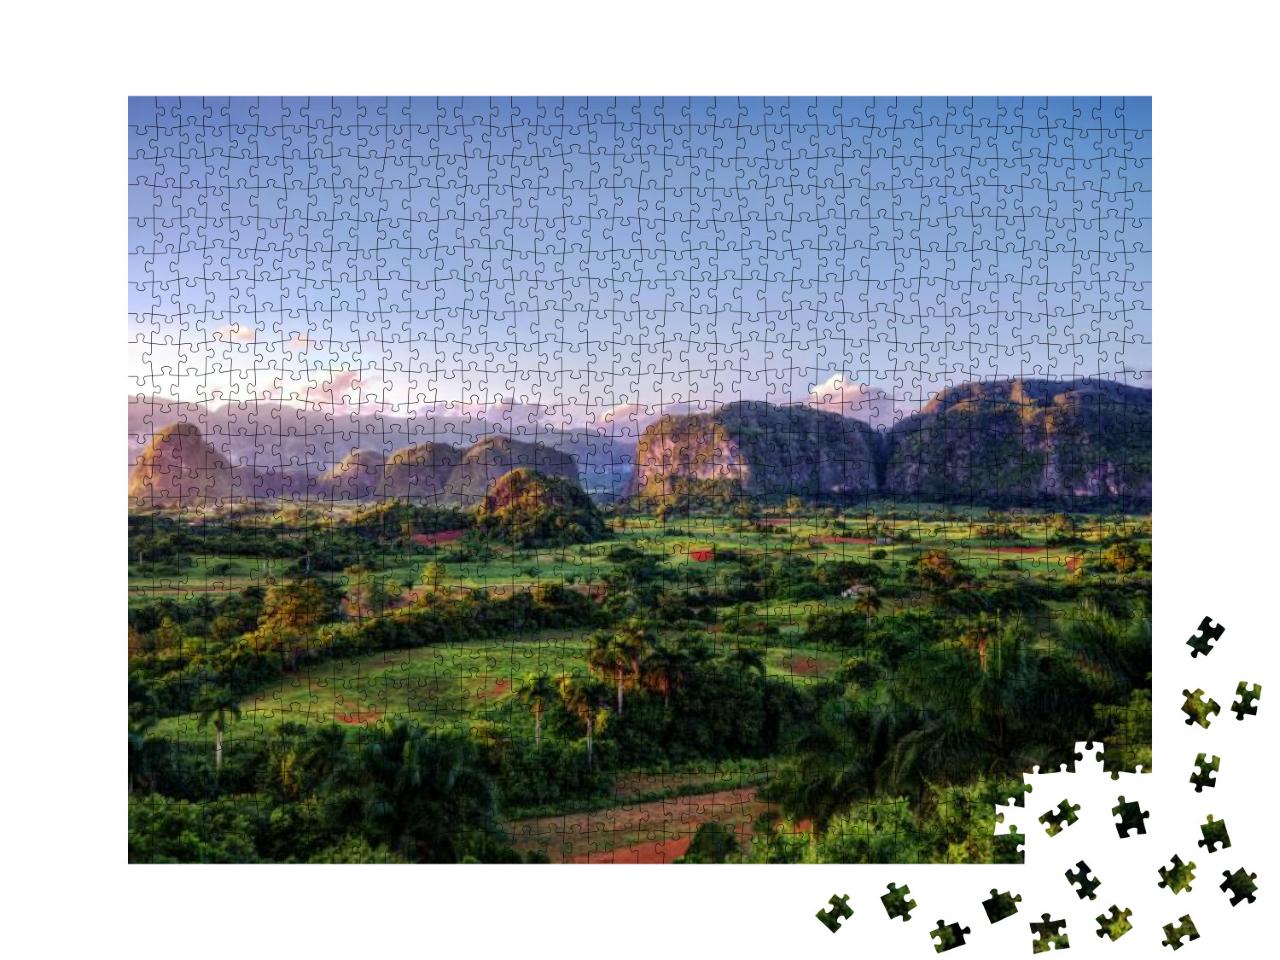 Cuba Vinales... Jigsaw Puzzle with 1000 pieces